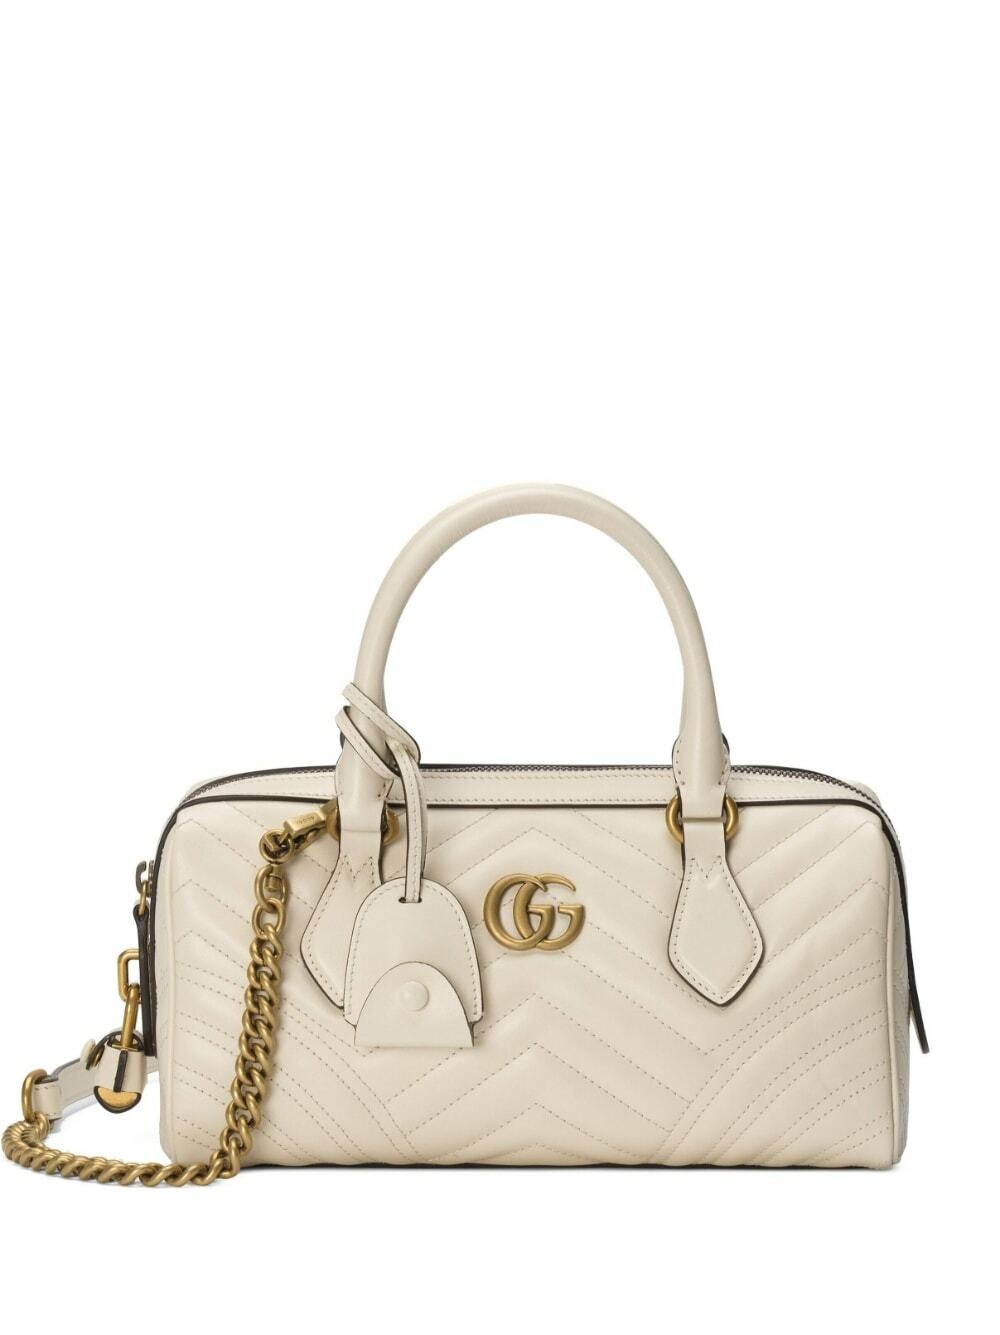 GUCCI - Diana Leather Handbag Gucci